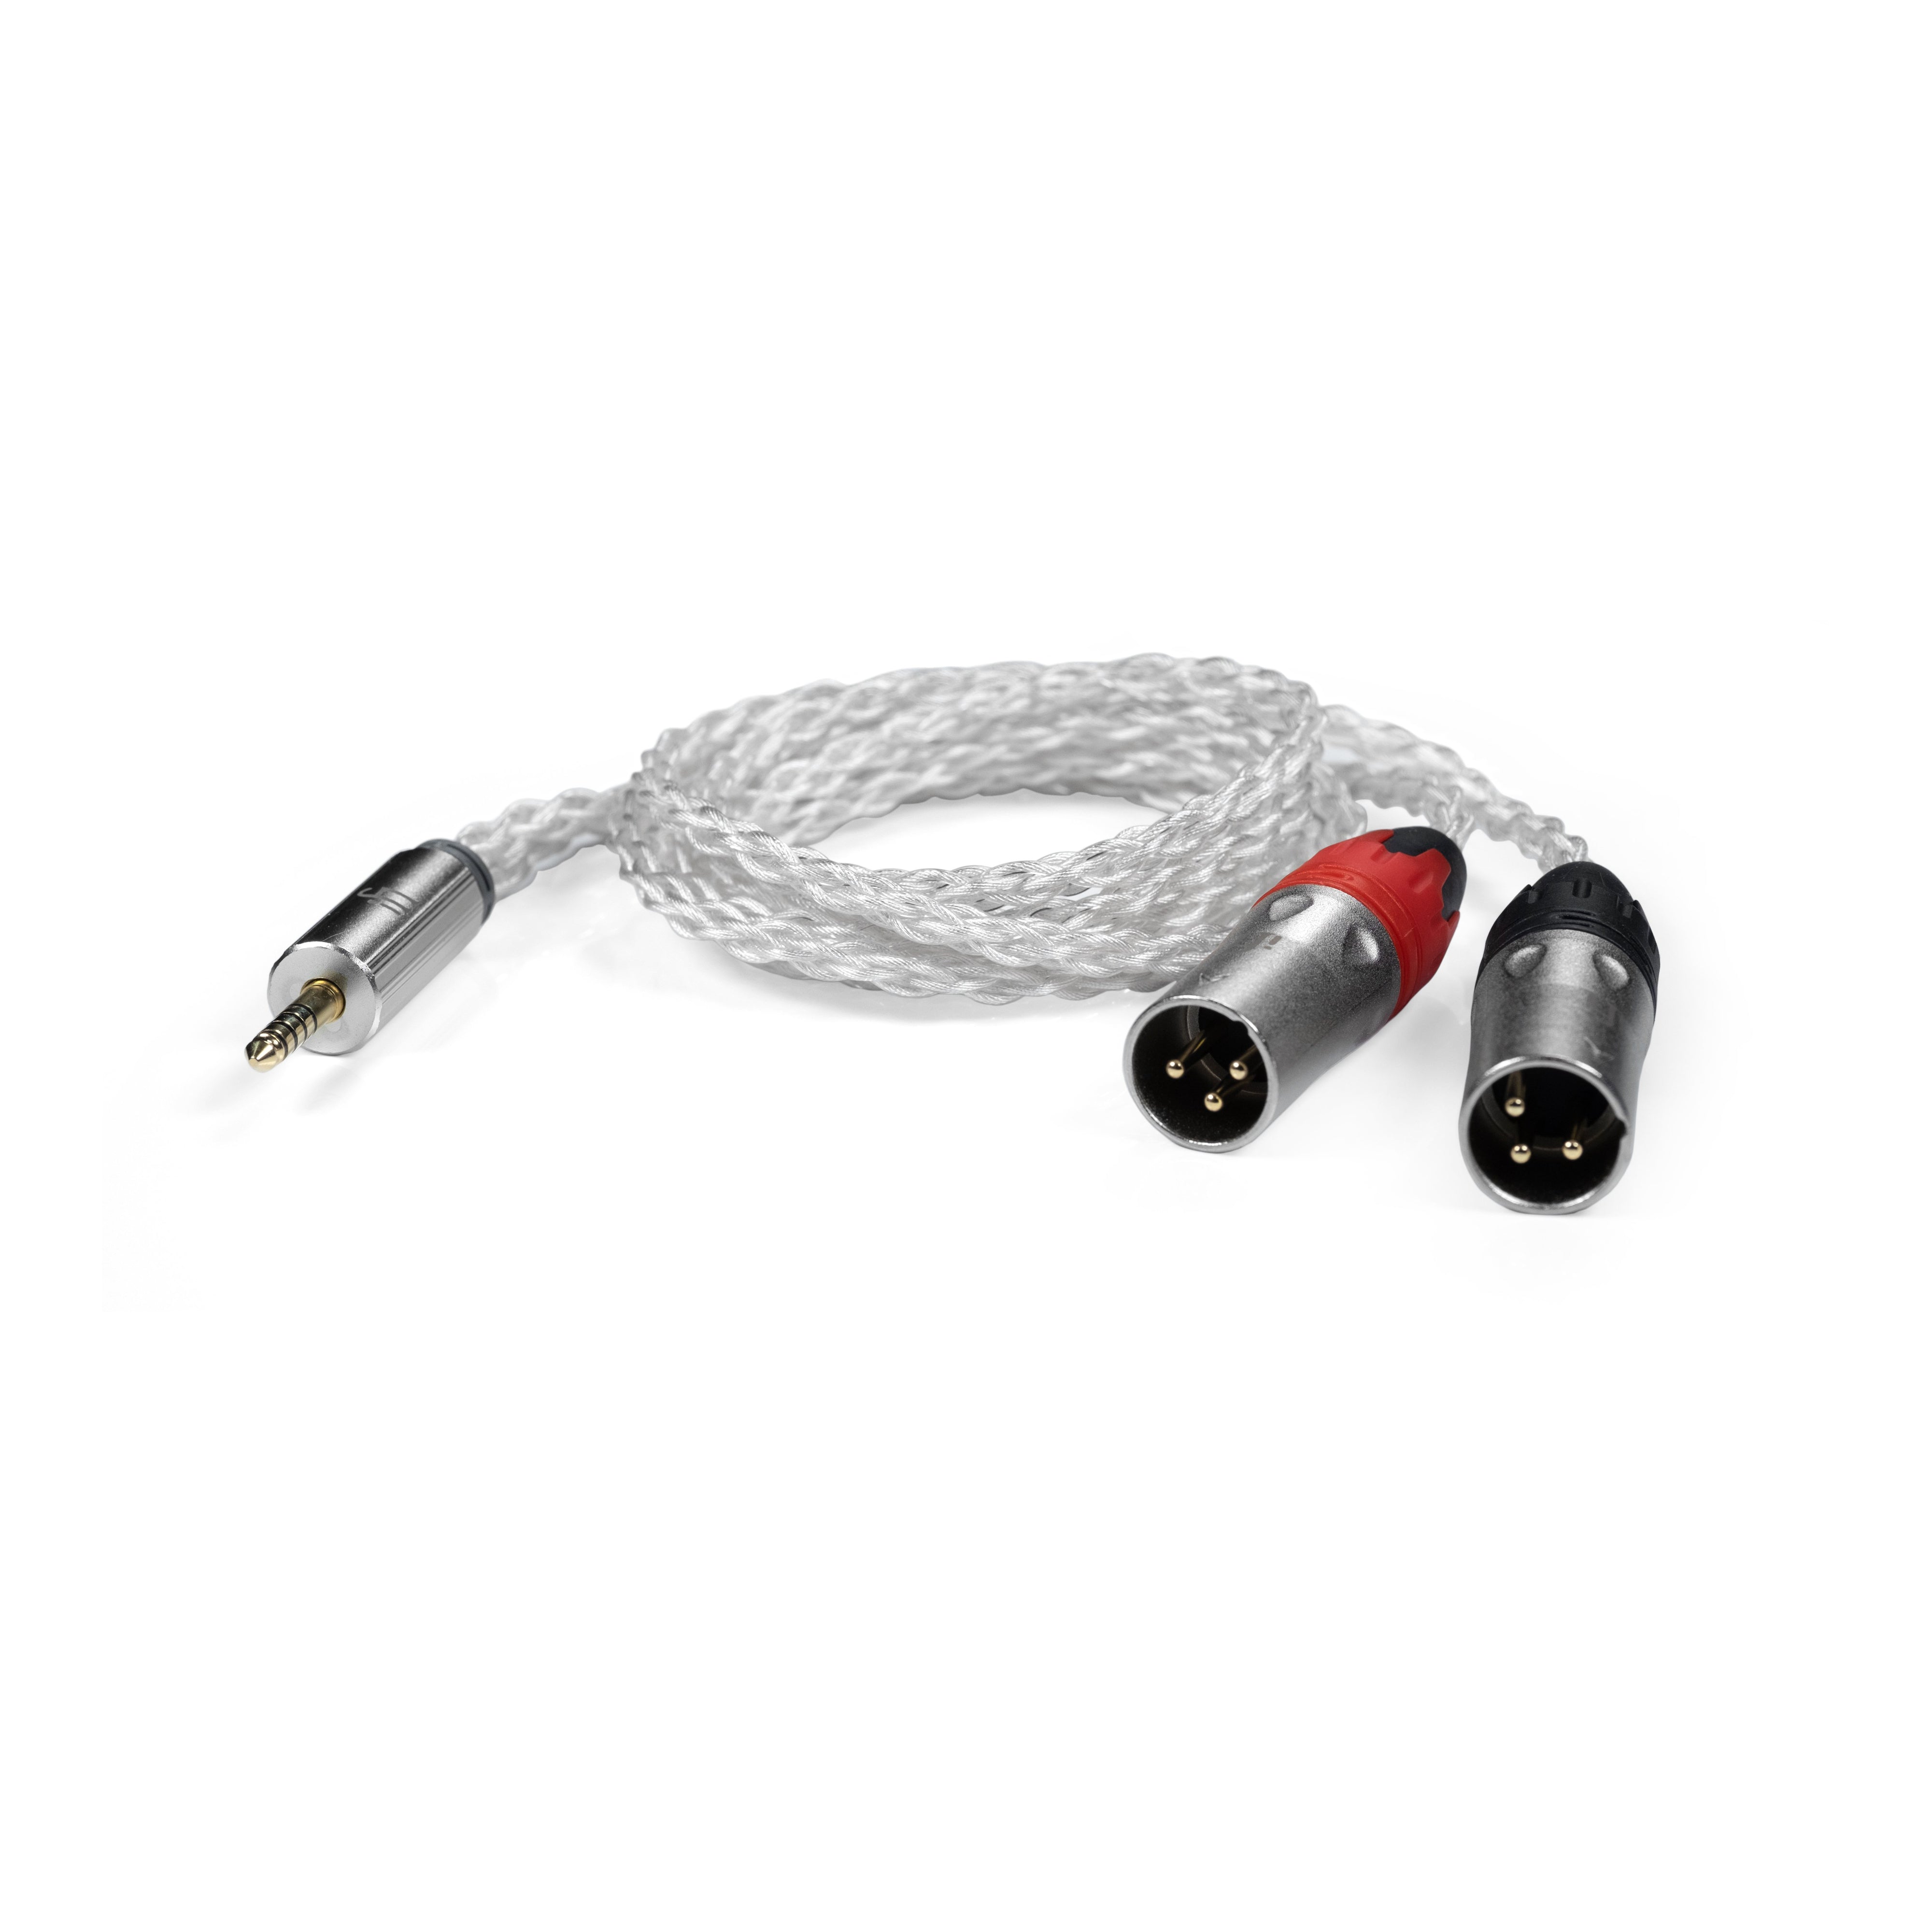 【新品、未開封】iFi audio 4.4mm to XLR cable